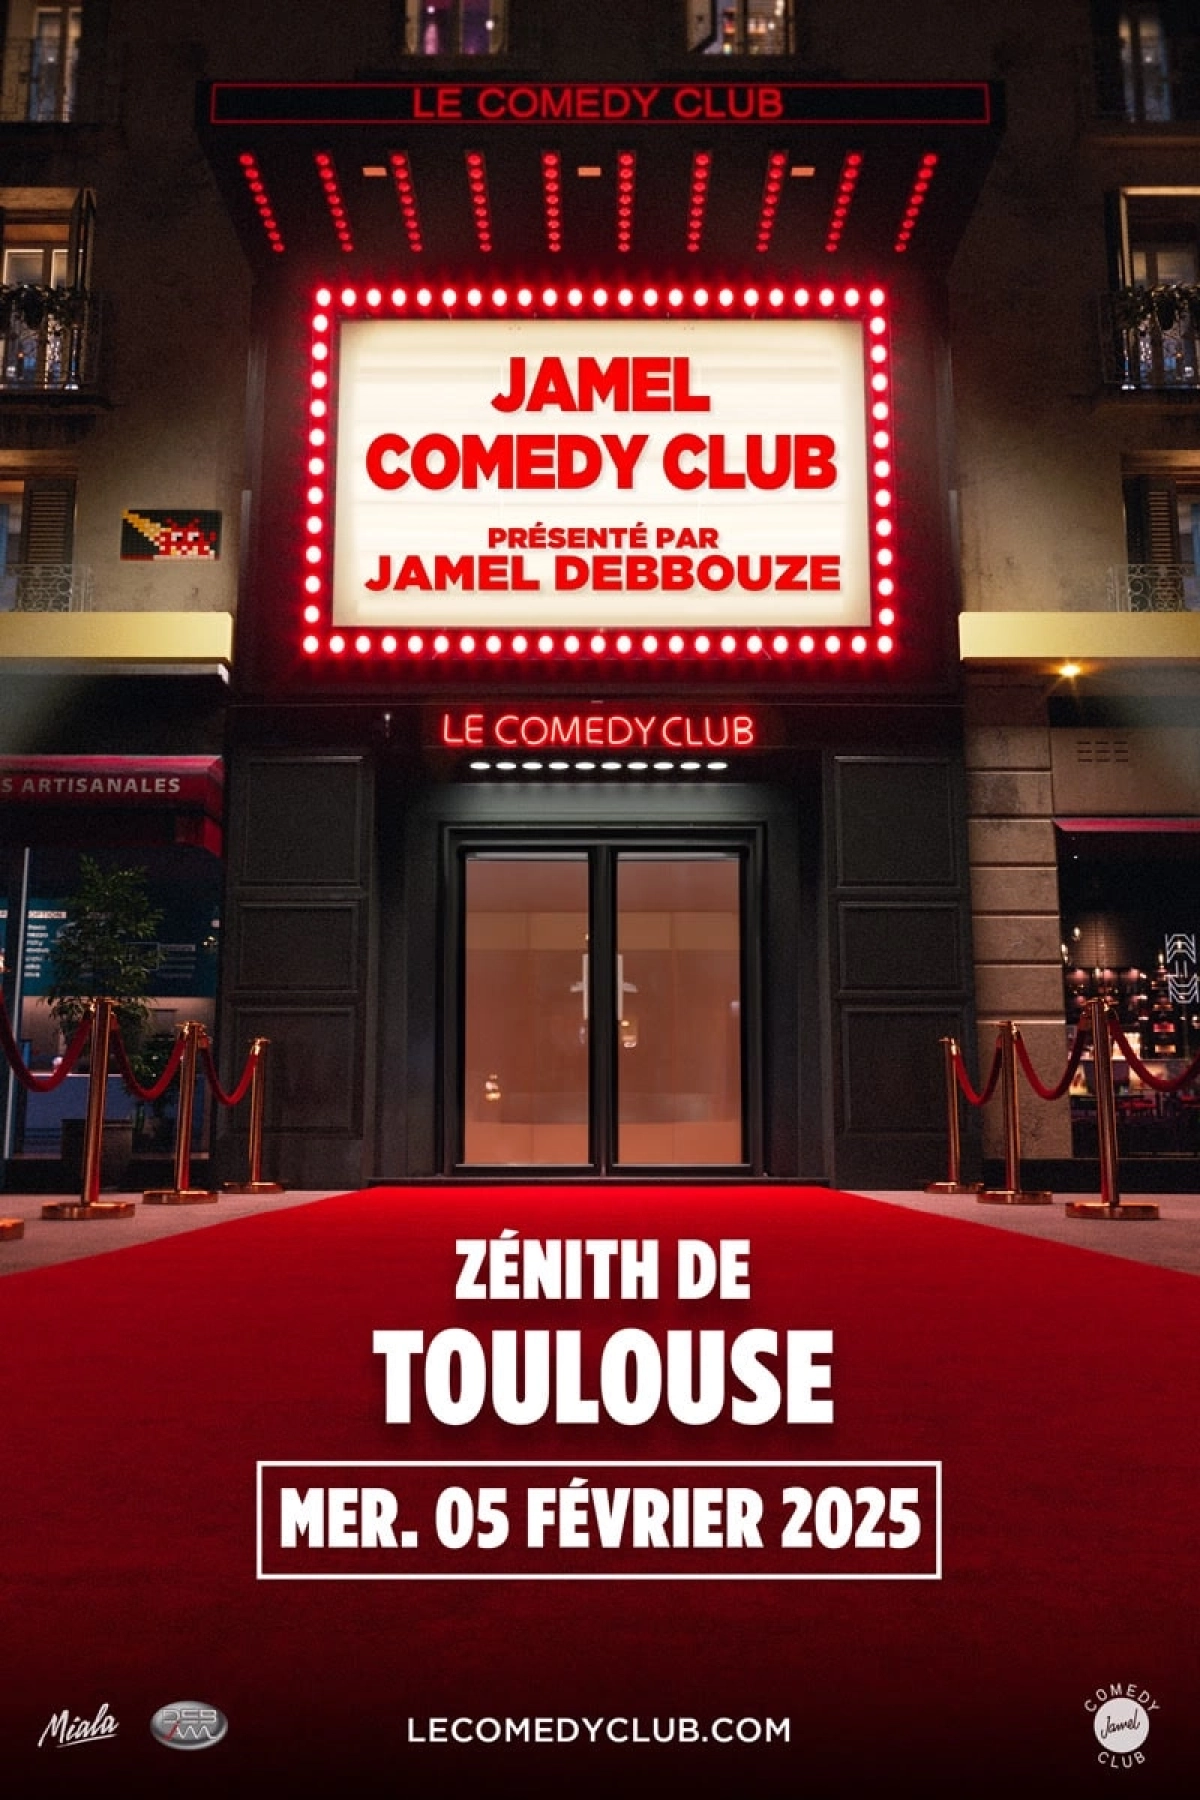 Jamel Comedy Club Zenith Tour 2025 at Zenith Toulouse Tickets